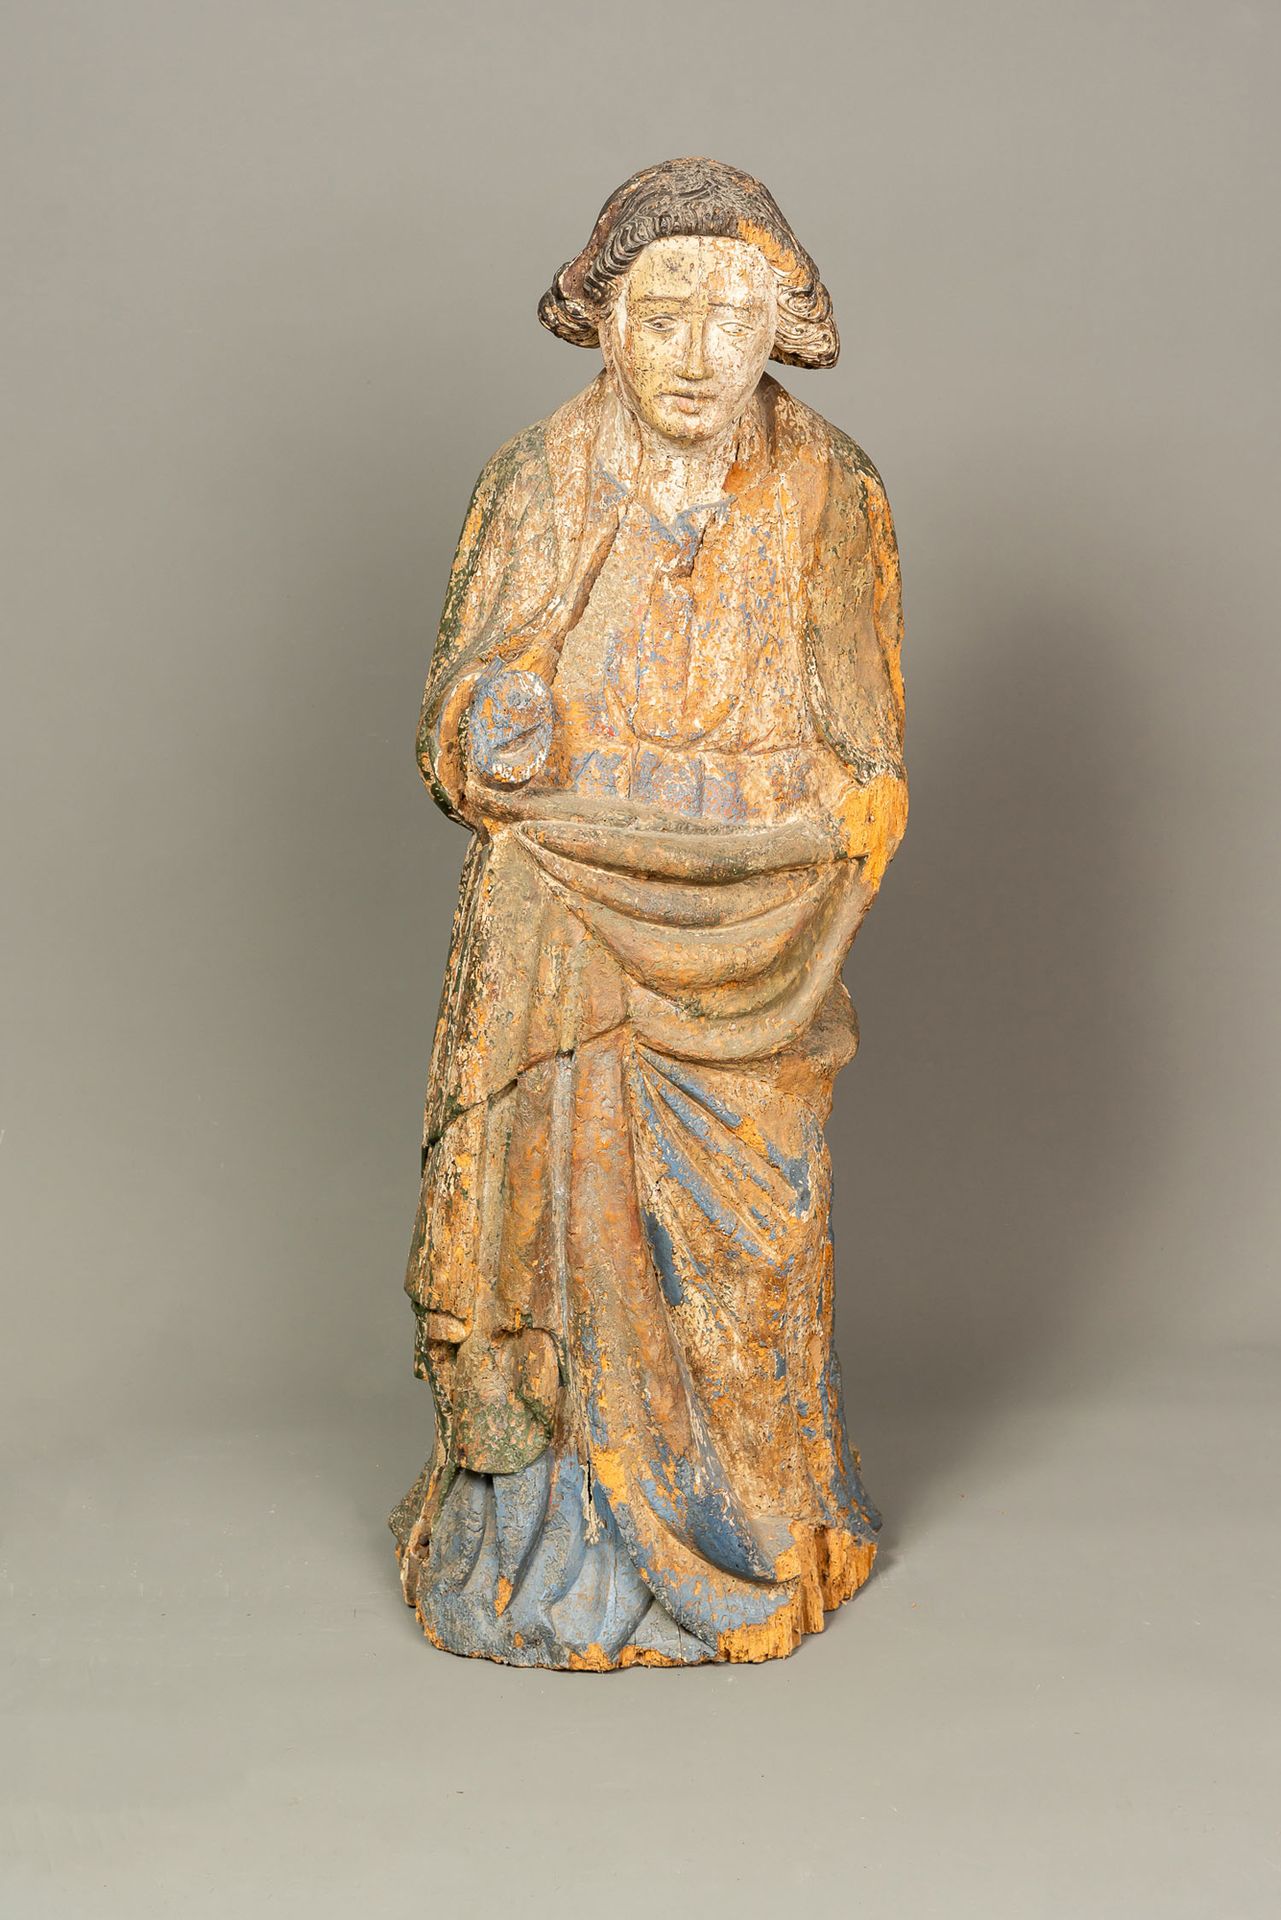 Tyrolian Sculpture 15th Century Sculpture tyrolienne du XVe siècle, grand person&hellip;